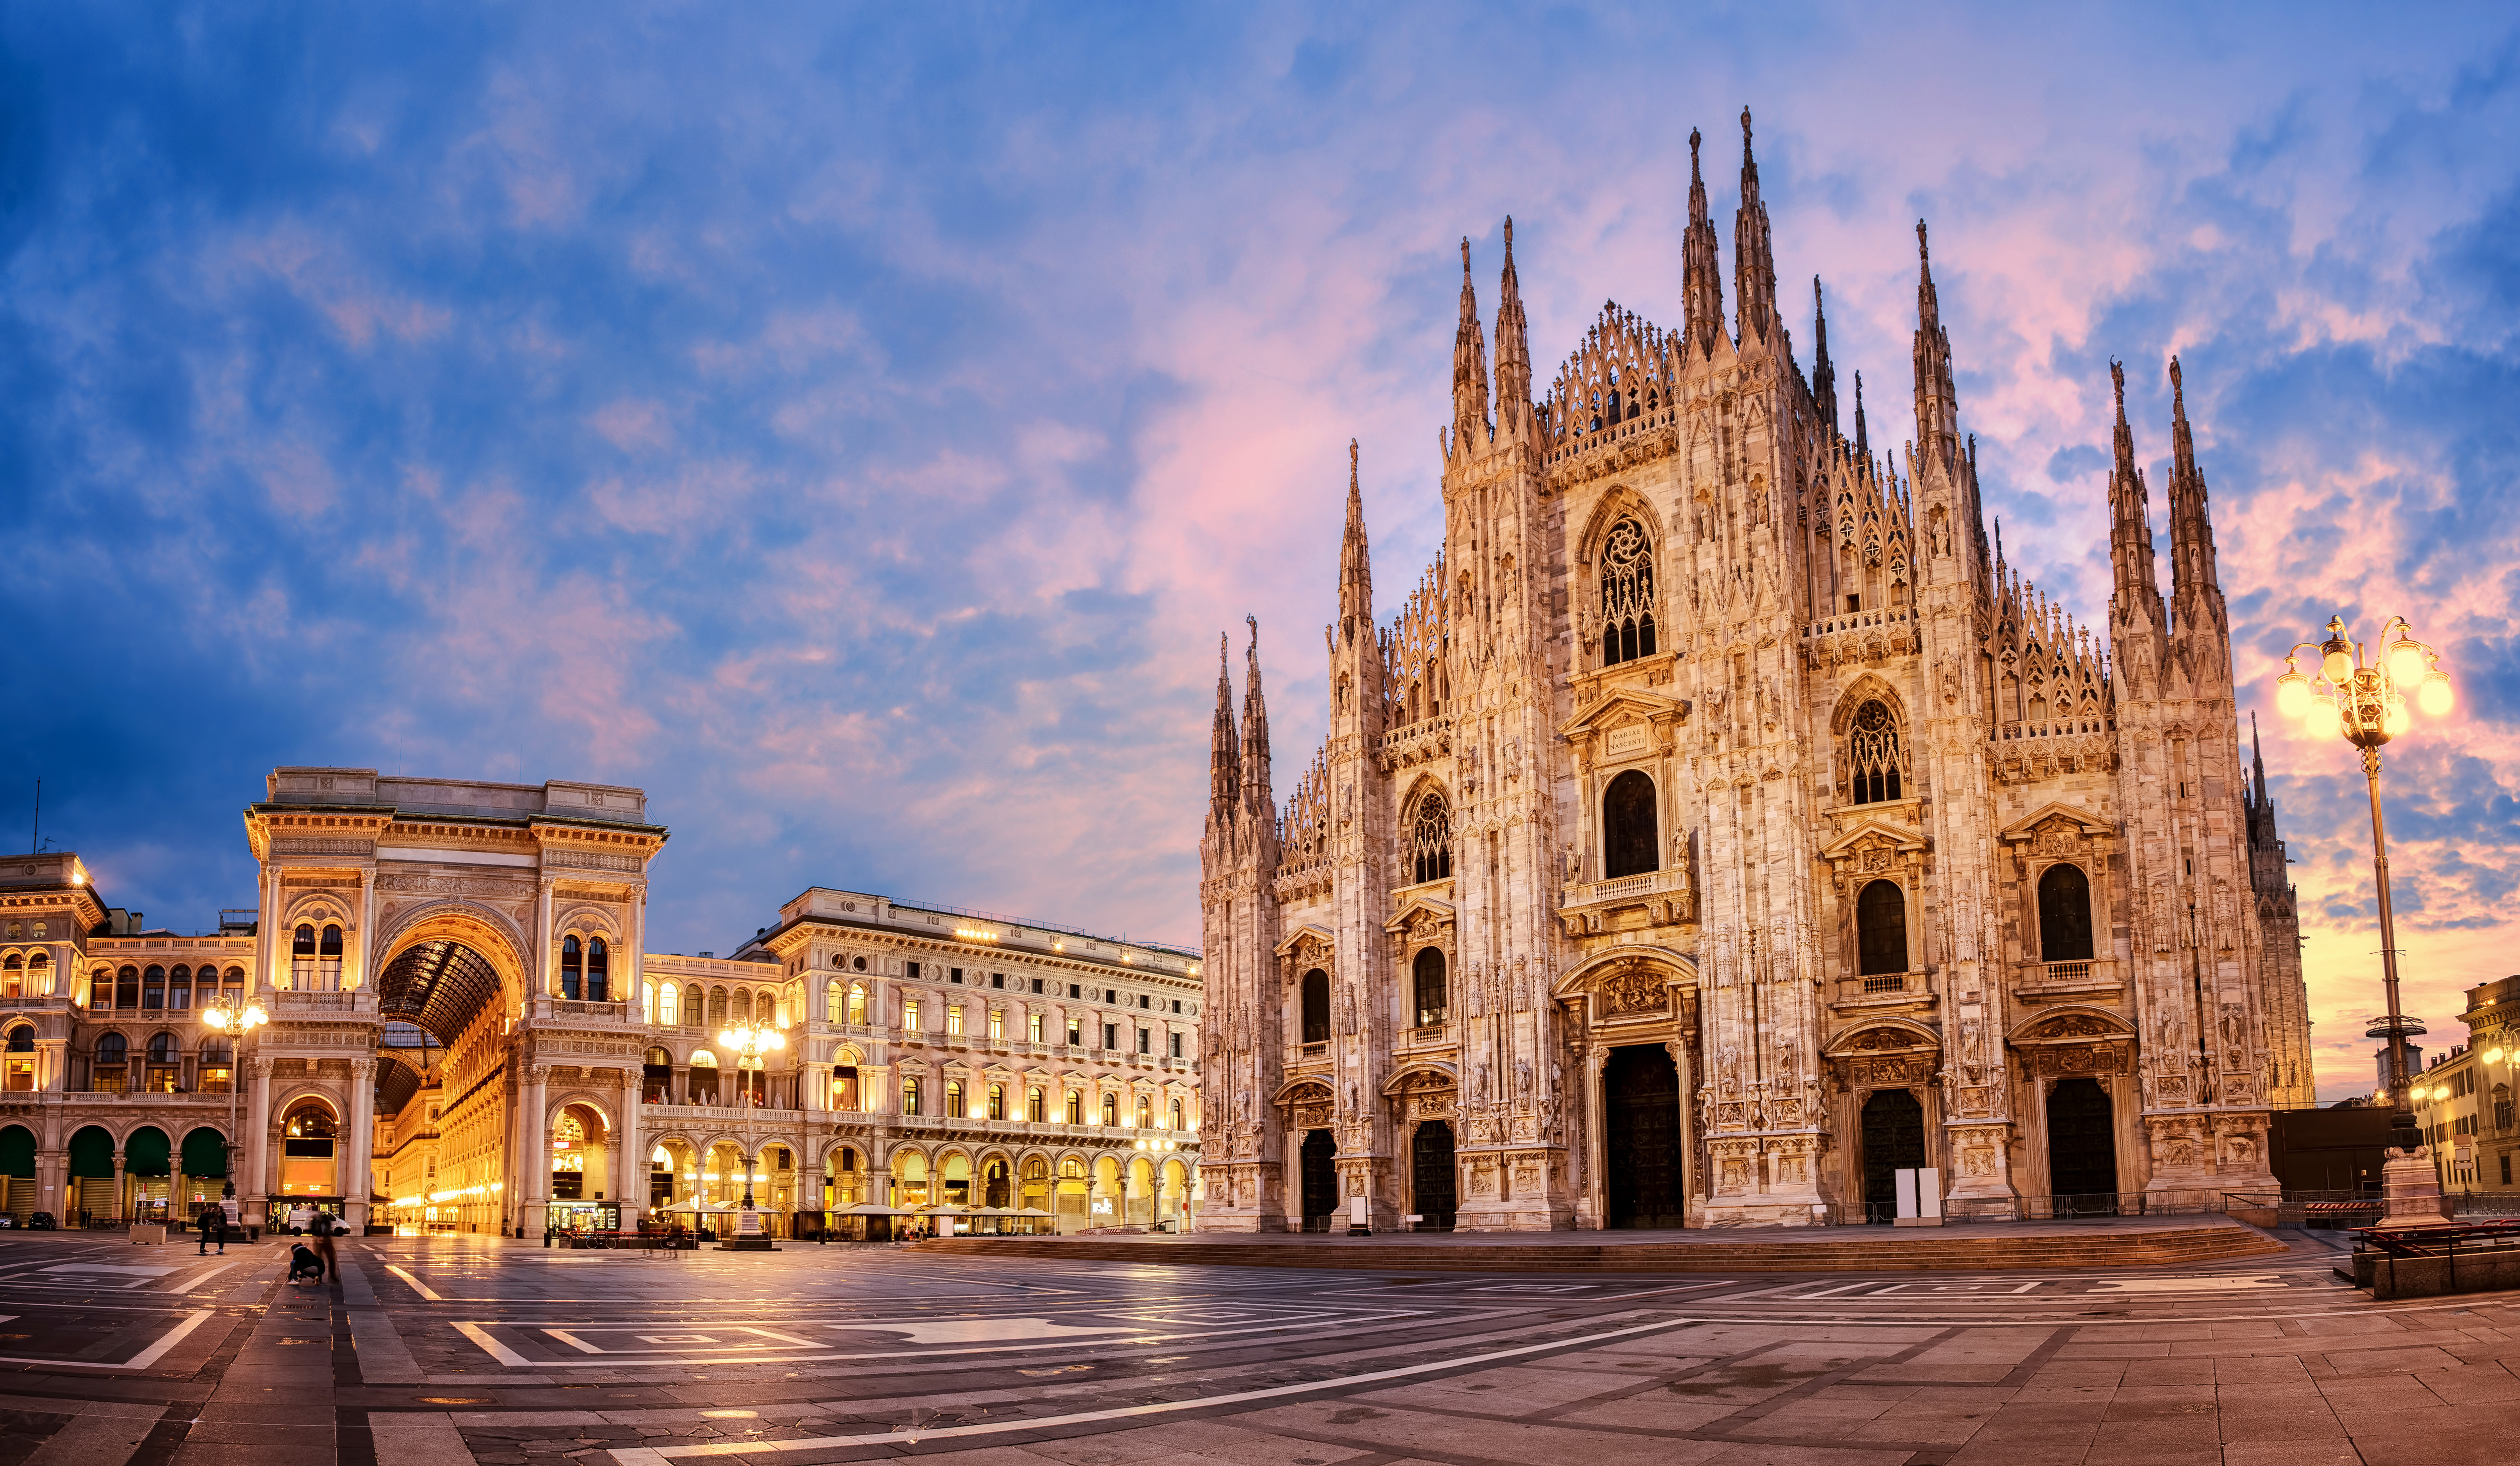 Enjoy Milan's magnificent Duomo cathedral